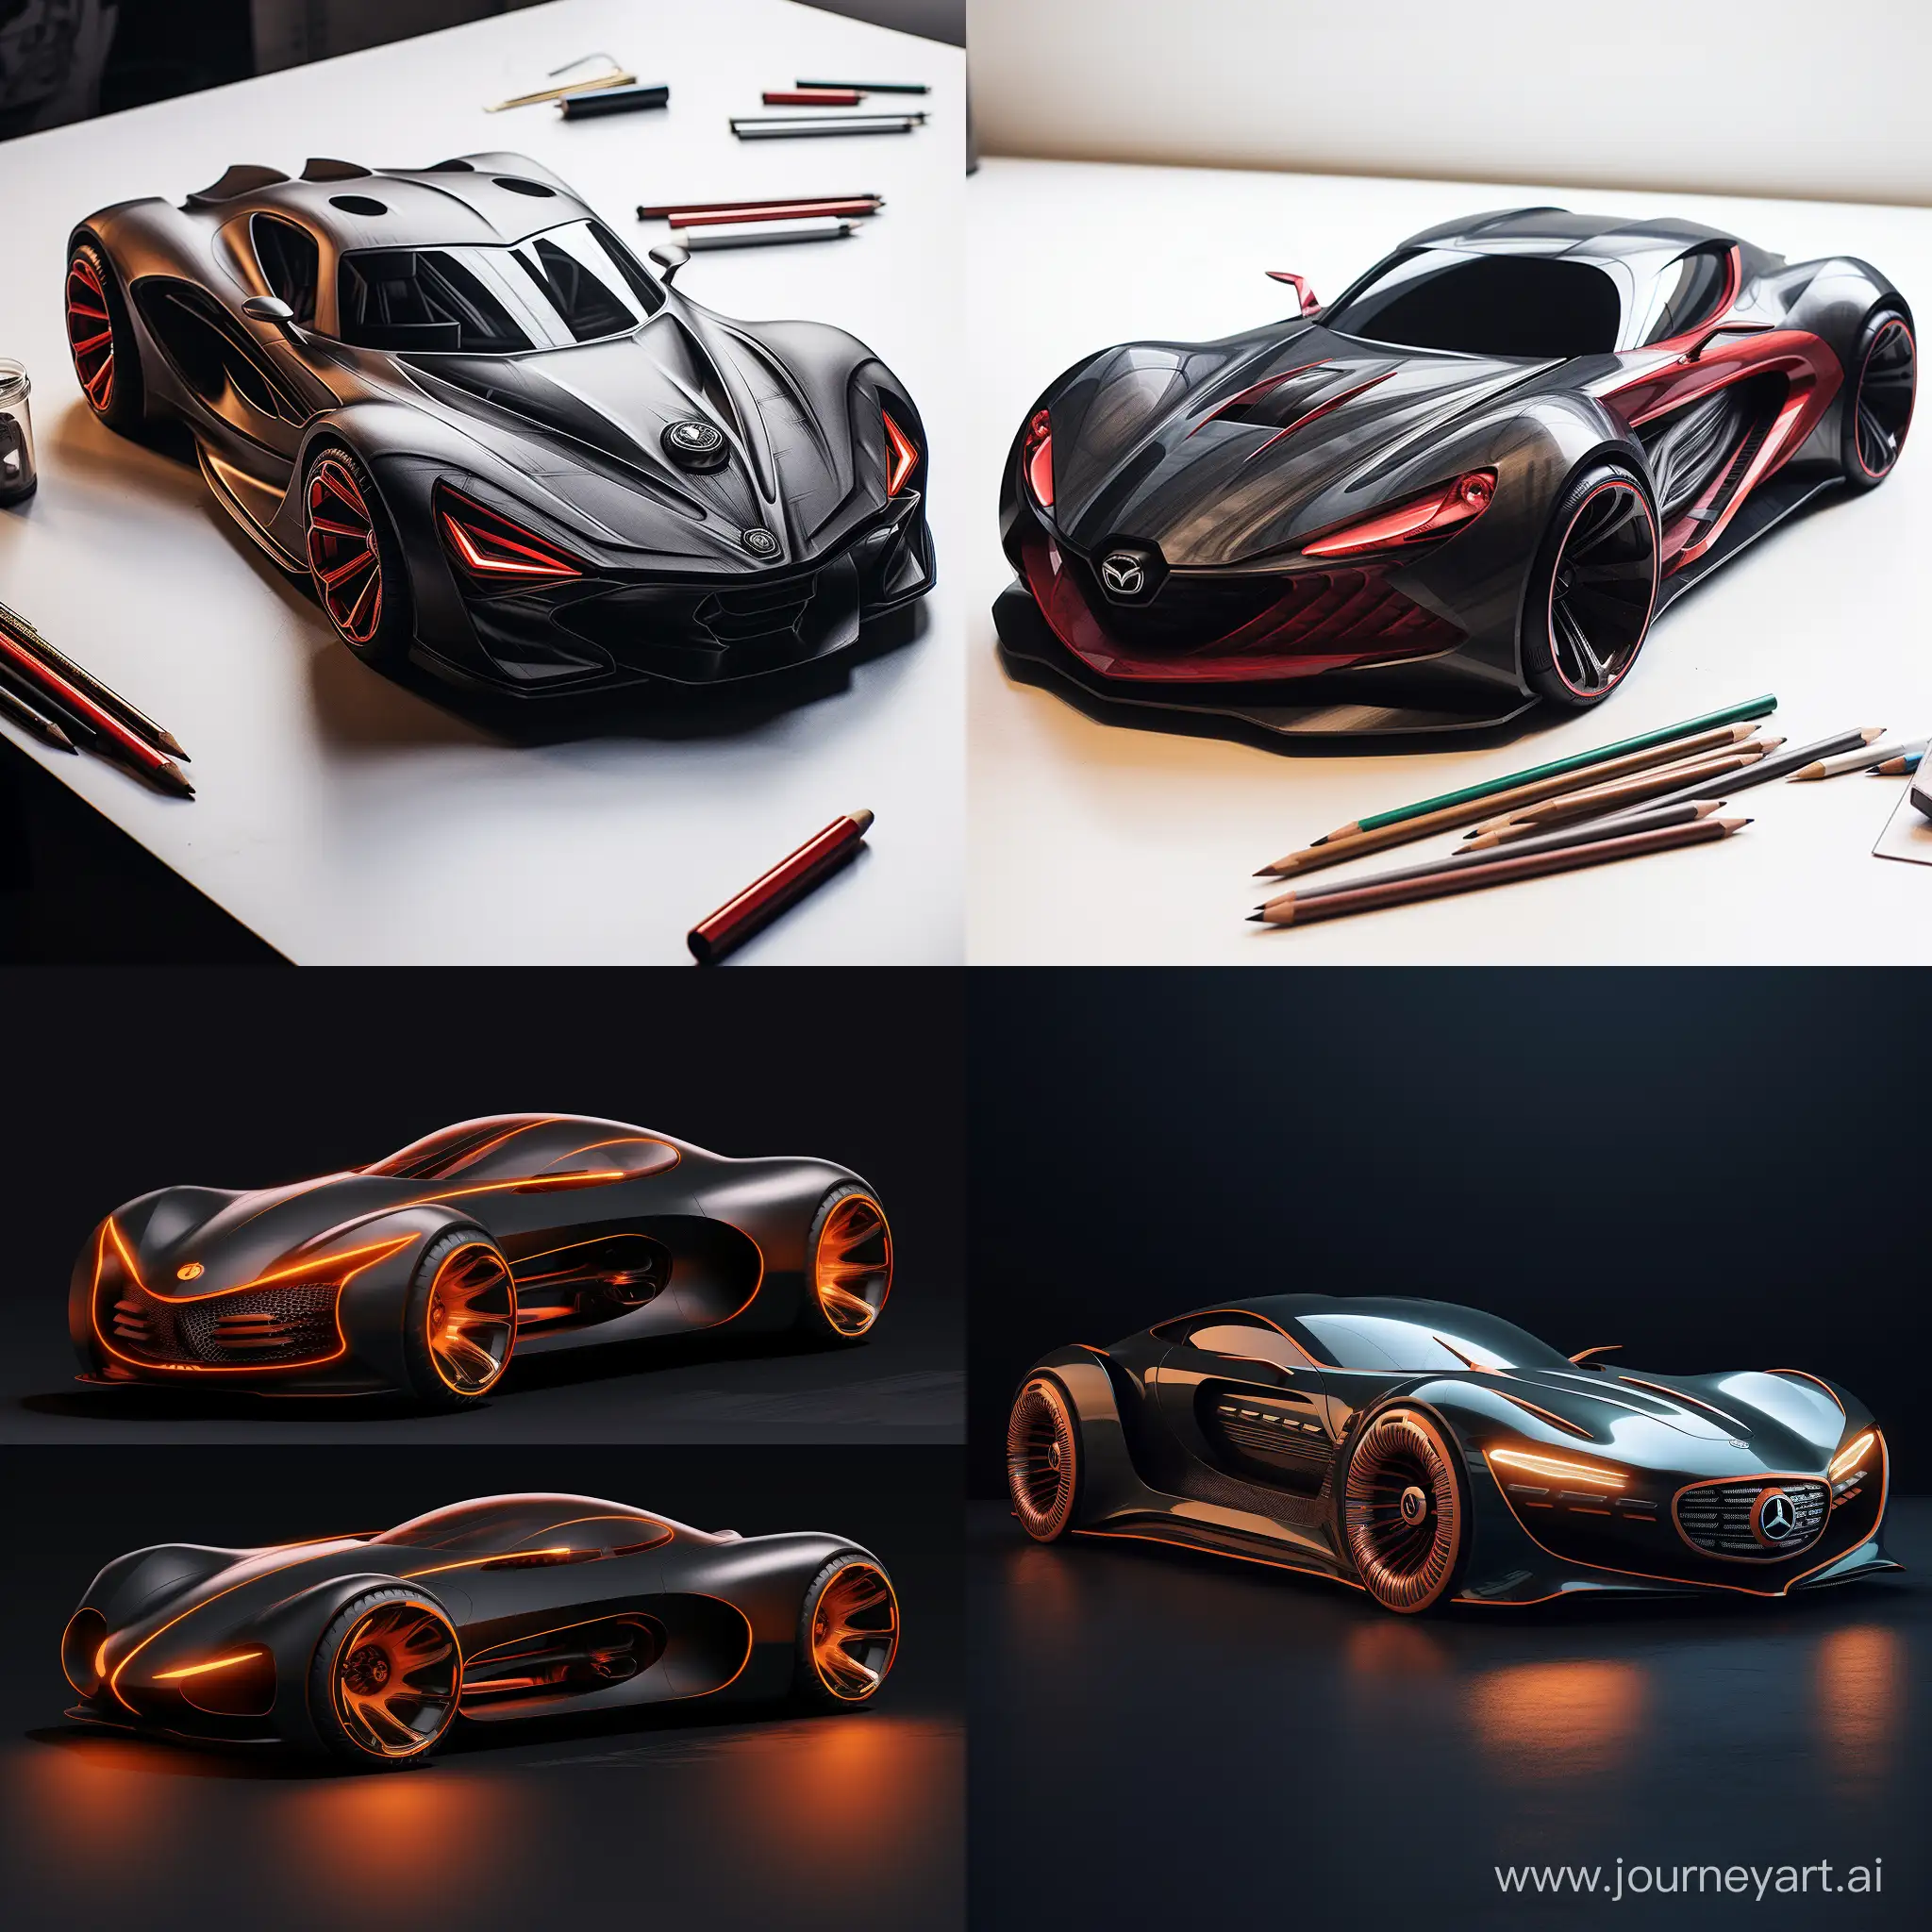 Futuristic-Red-Sports-Car-Design-Concept